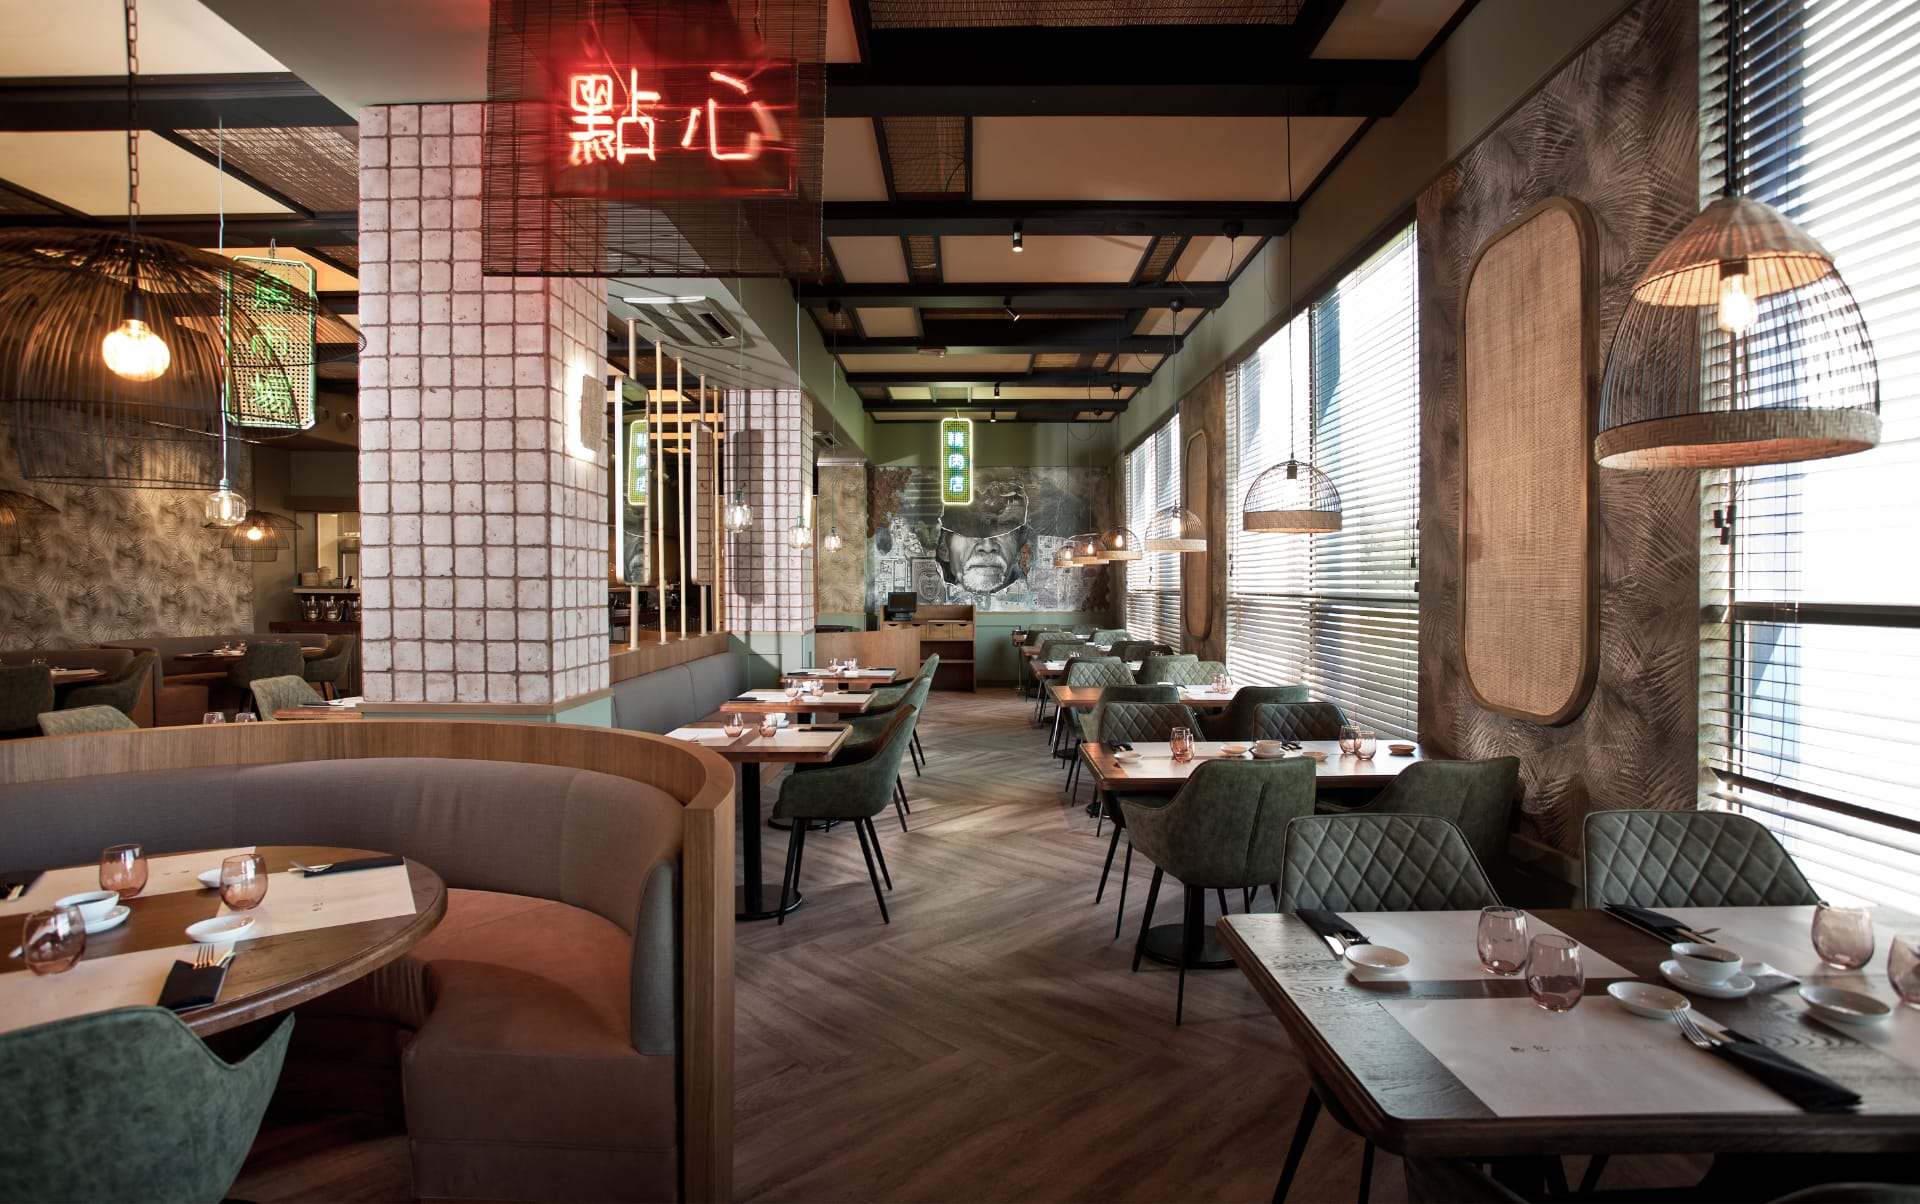 Hot bao - Asiatic Restaurant - Architecture and Interior design - Origen studio -hero